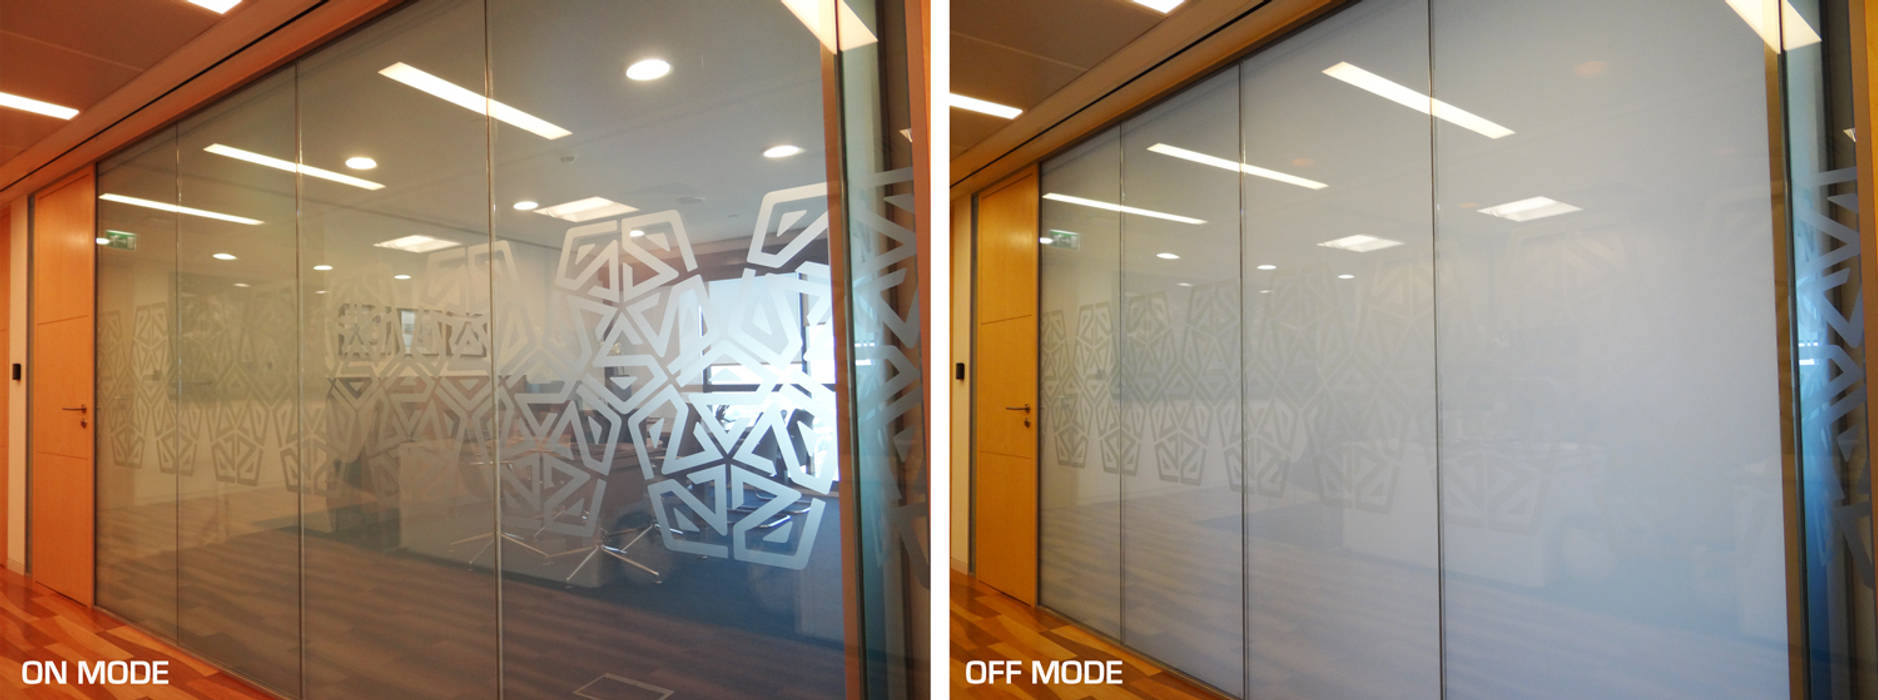 Oficinas centrales Intercomet Group Dubai, Vidrios de privacidad Vidrios de privacidad Espacios comerciales Edificios de oficinas